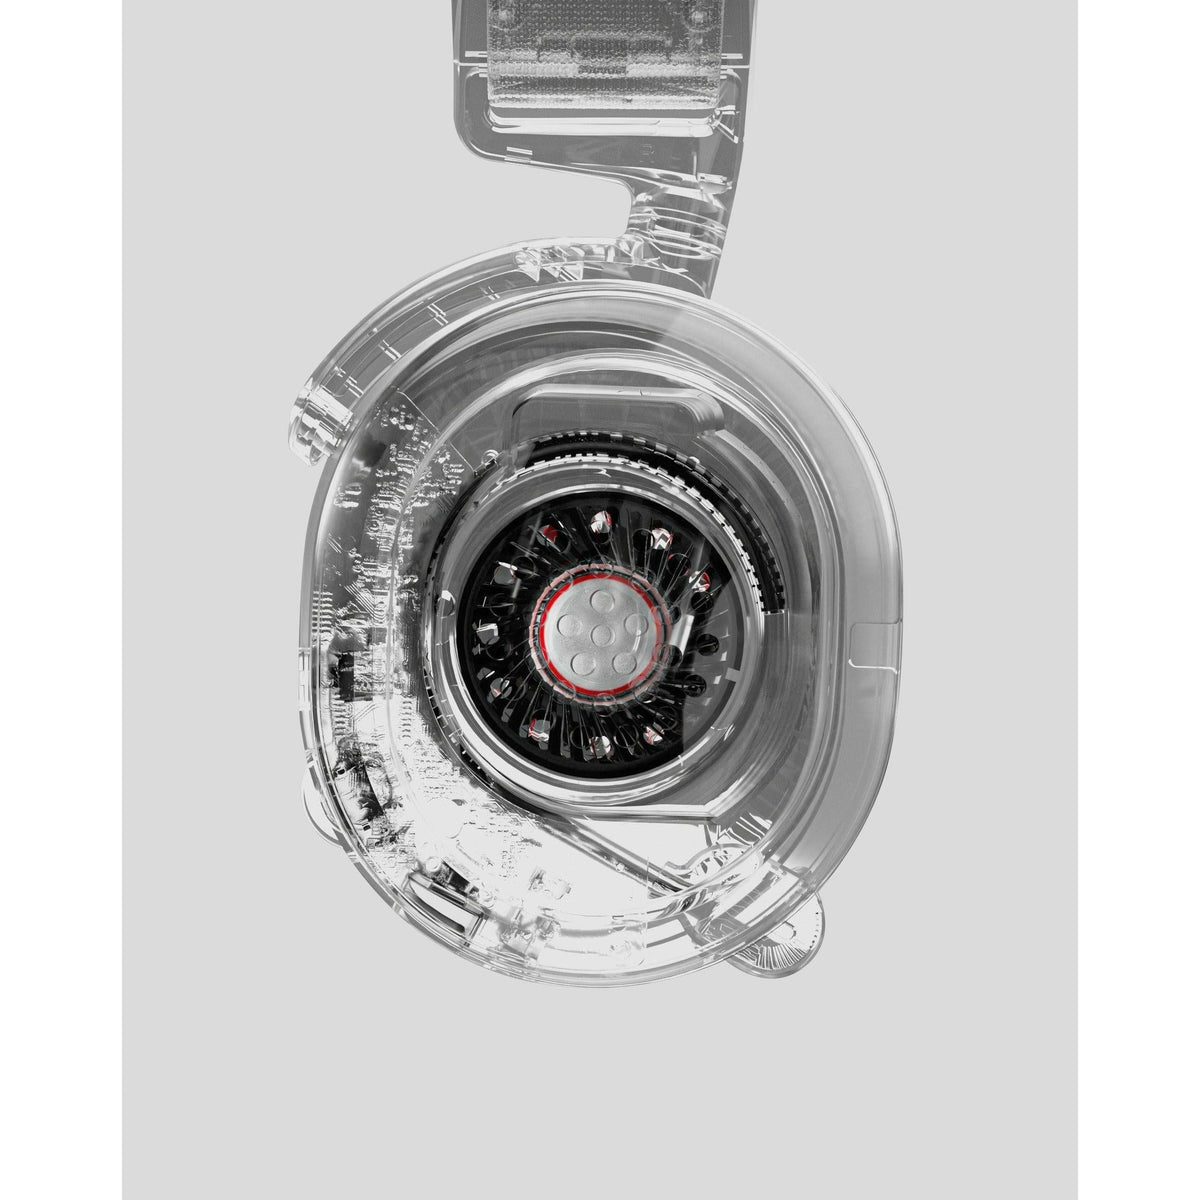 SteelSeries Arctis Prime Over-Ear Gaming Headset - Black | 34-61487 (7517897425084)